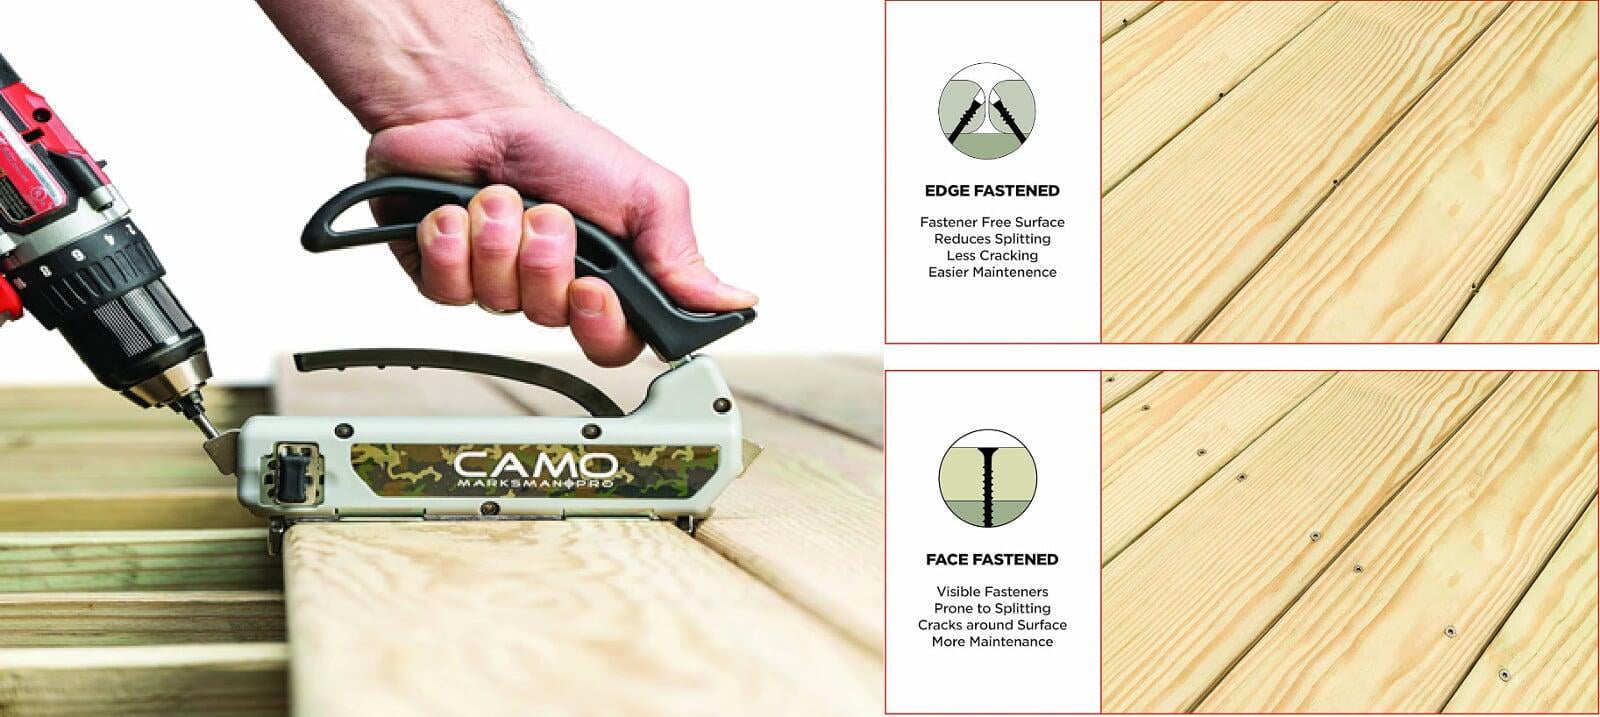 CAMO Marksman Pro Tool